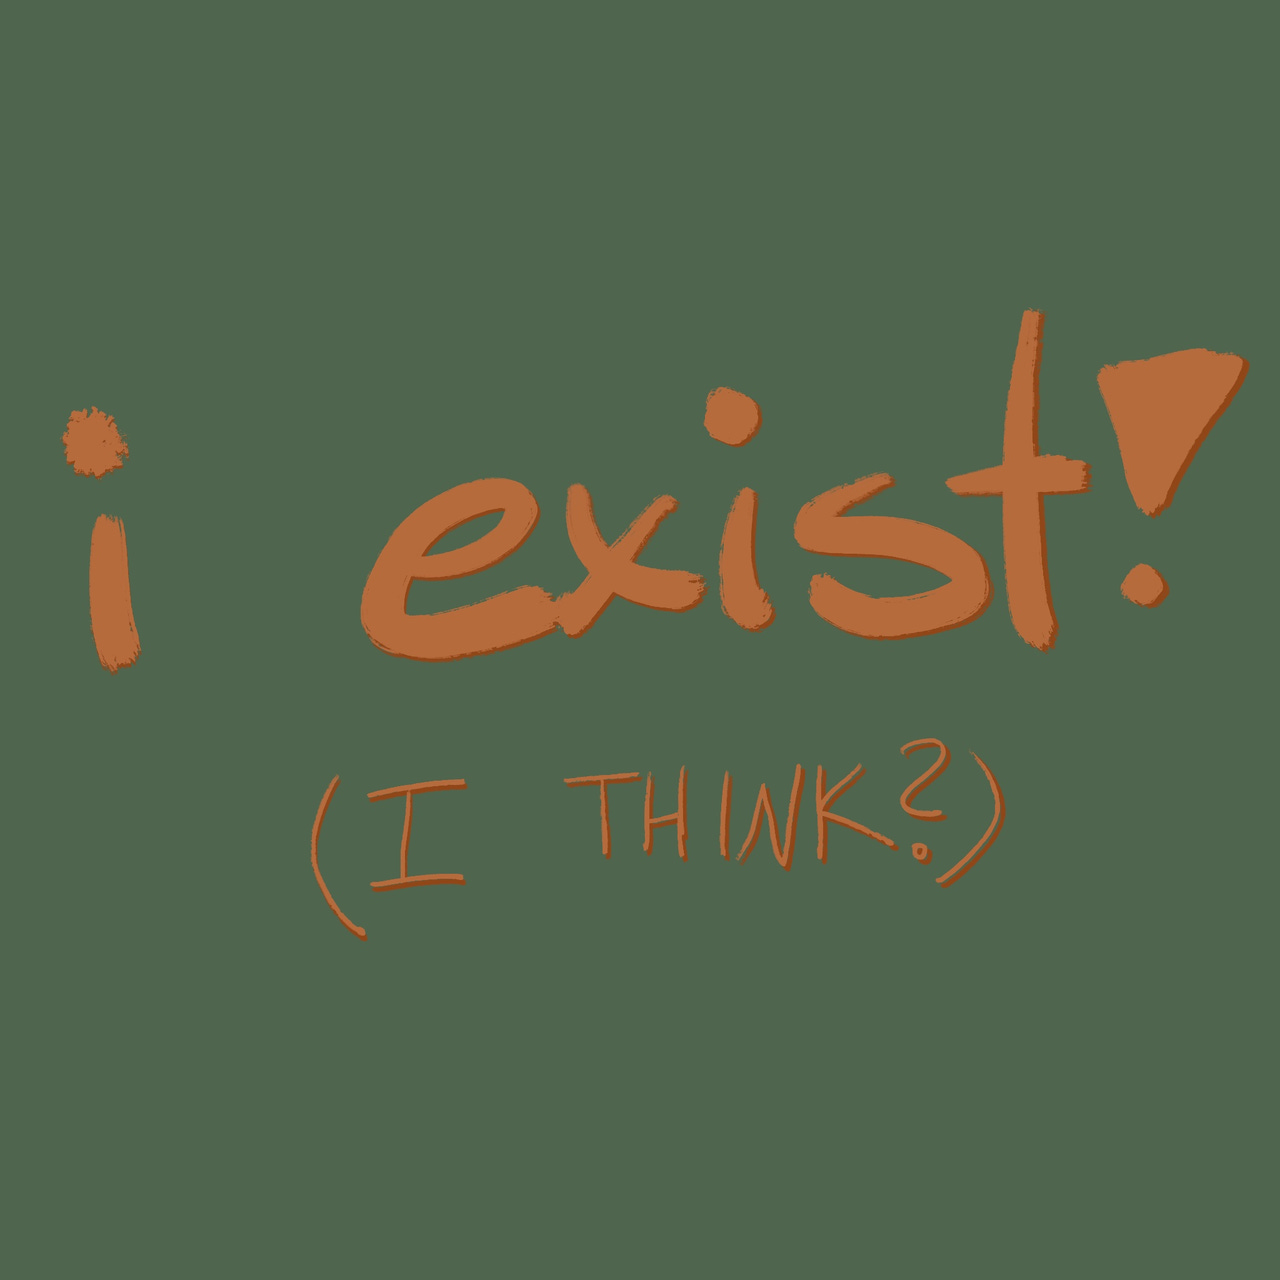 I Exist! (I think?)